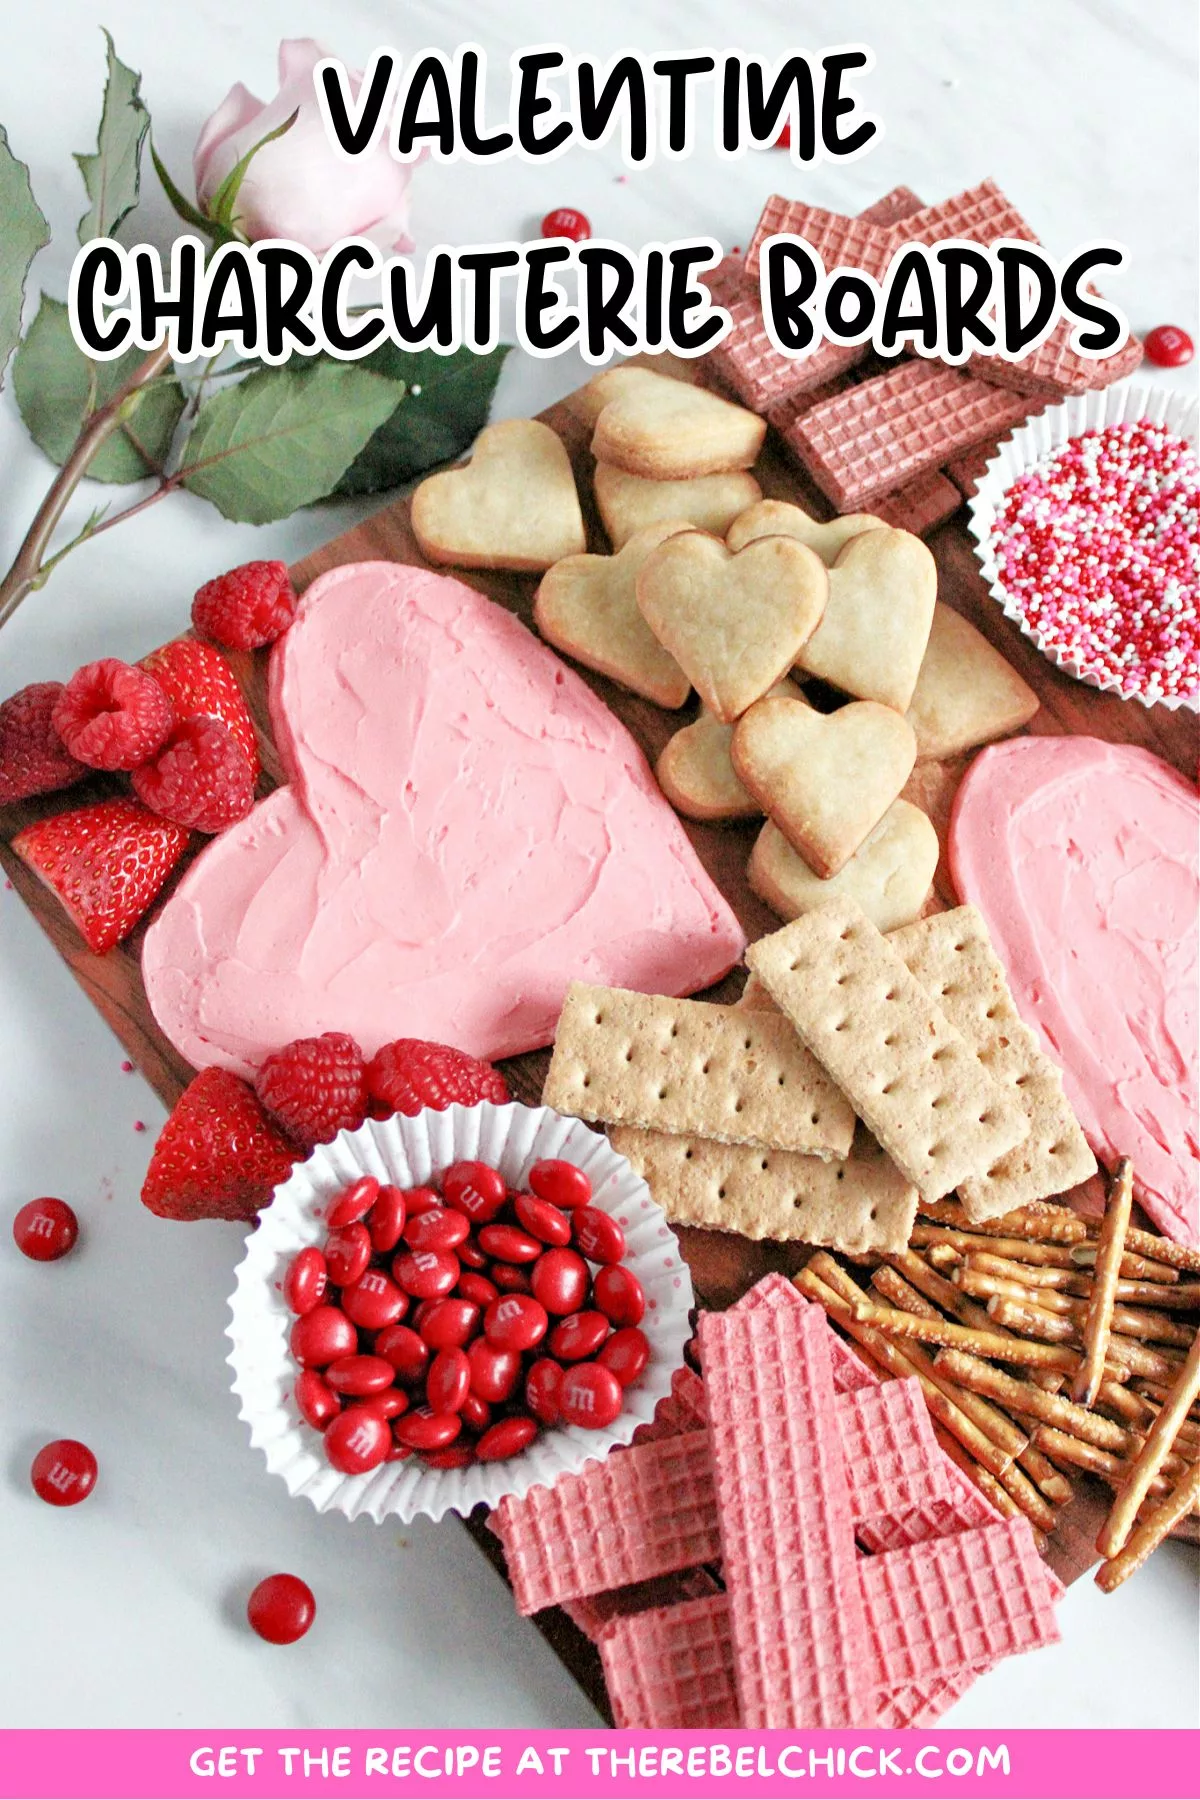 Valentine Charcuterie Boards